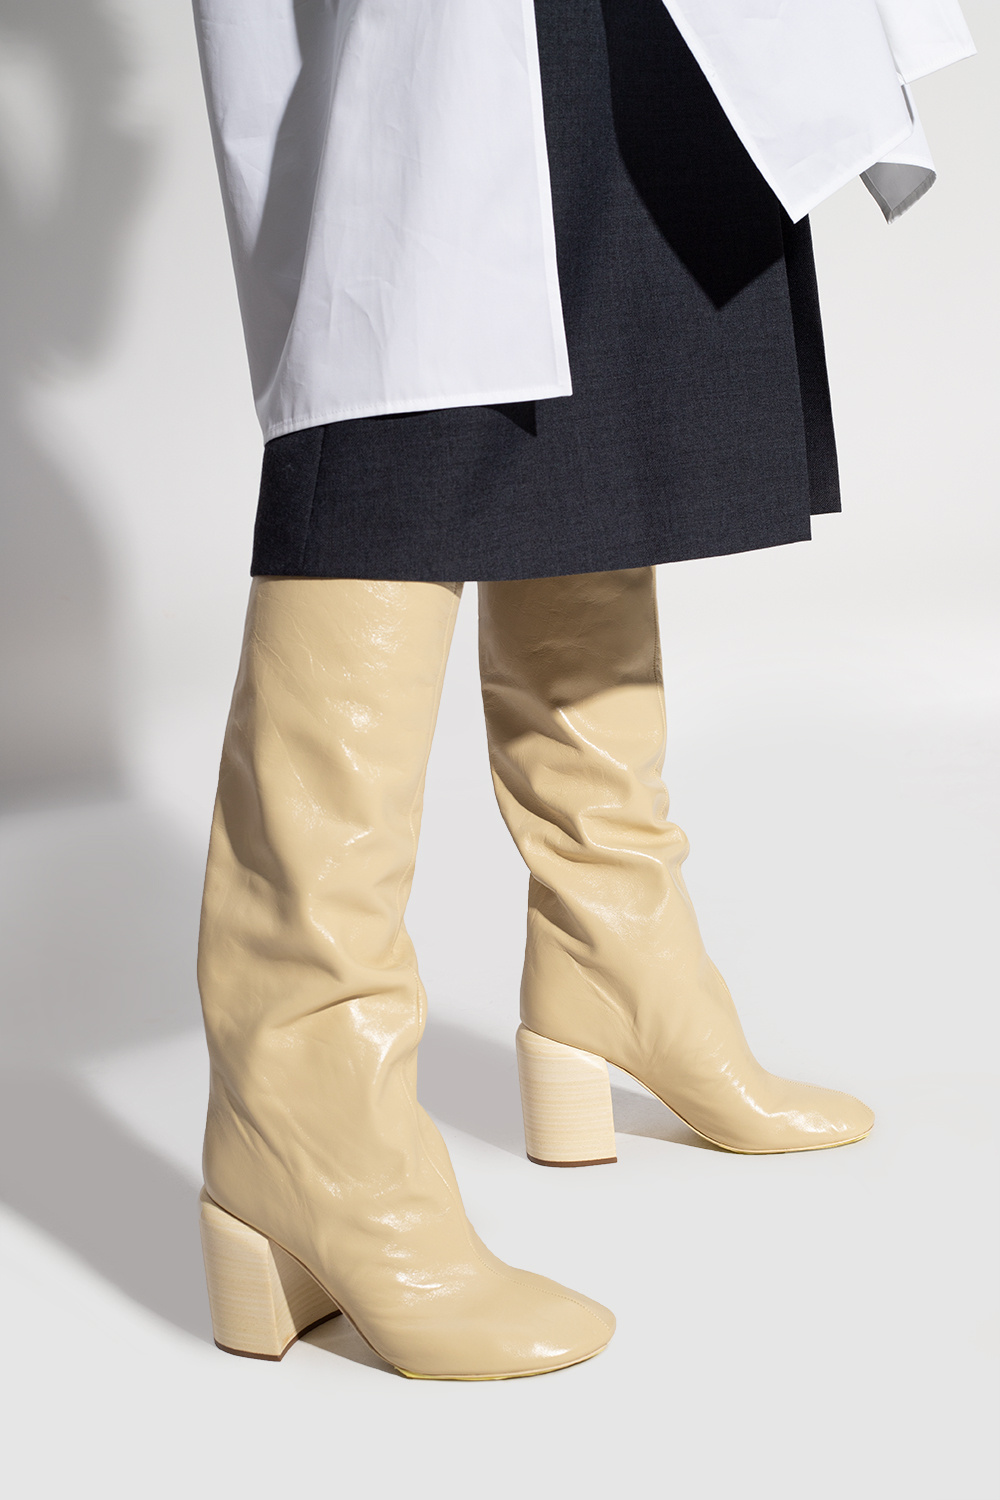 JIL SANDER 'Nikky' boots | Women's Shoes | Vitkac